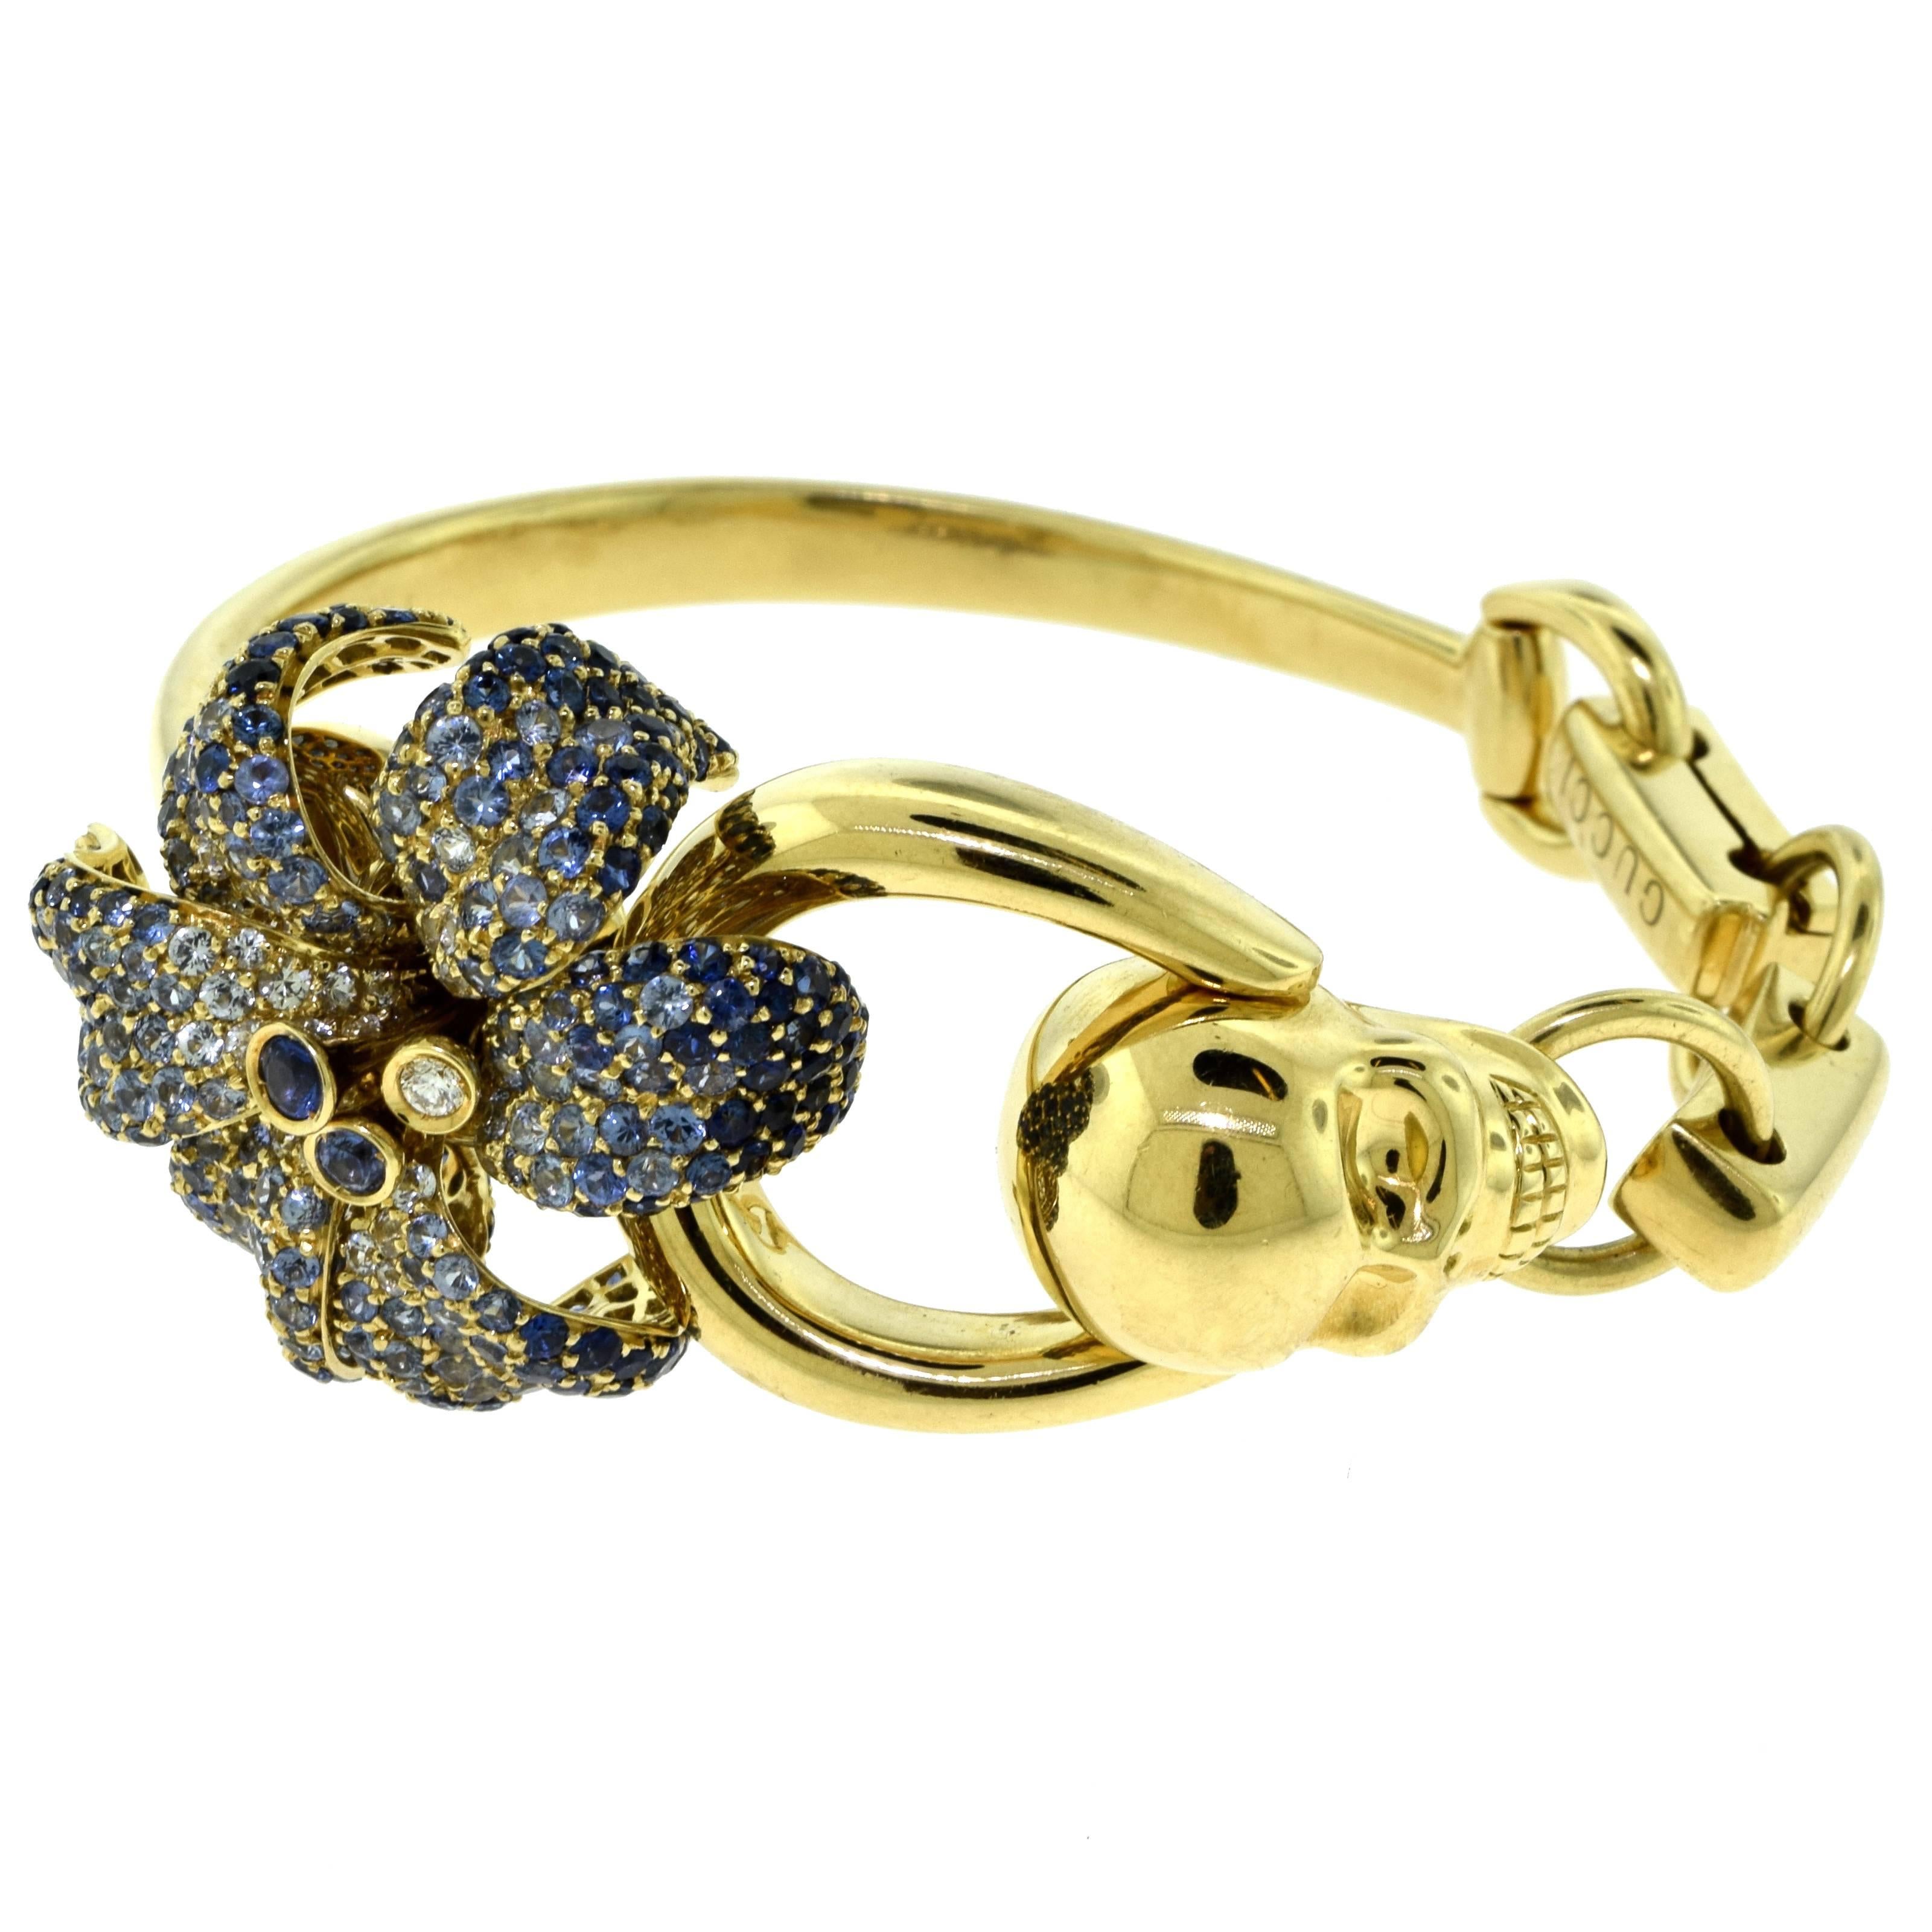 Gucci Flora Diamond and Sapphire Skull Bracelet in 18 Karat Yellow Gold